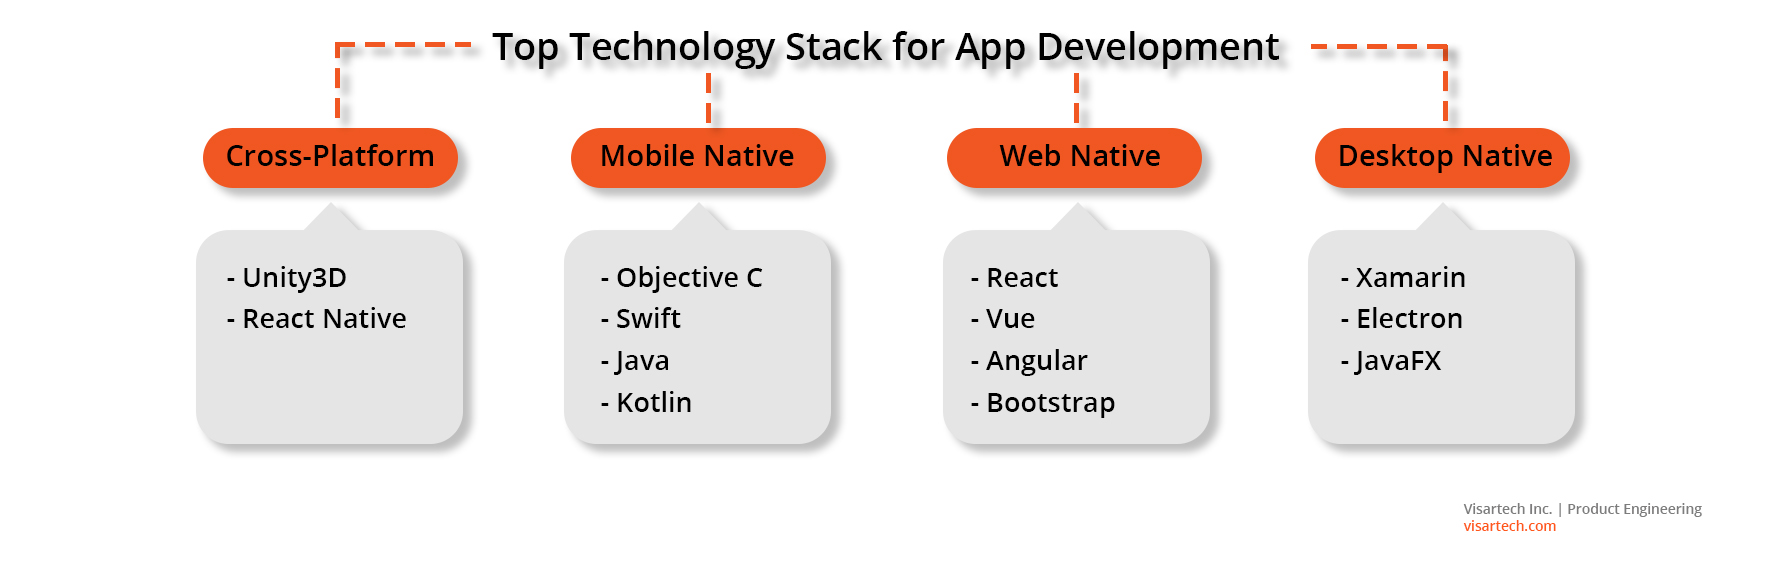 Top Technology Stack for App Development - Visartech Blog